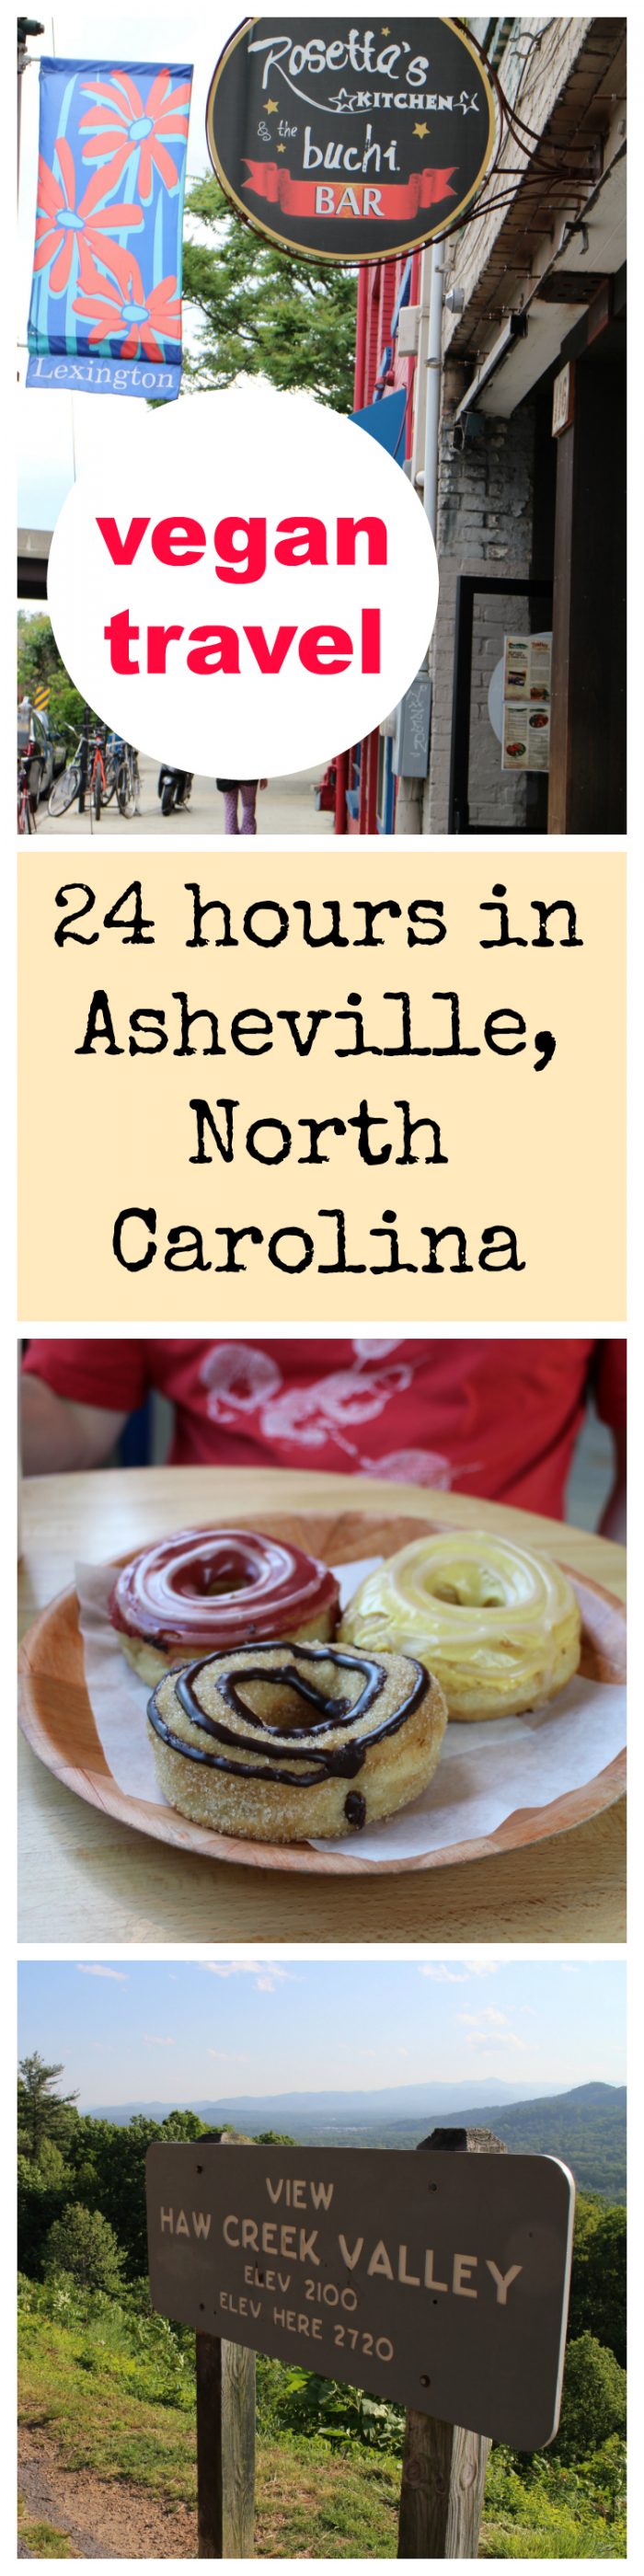 Vegan Travel: 24 hours in Asheville, North Carolina. Come along as I visit Plant, Vortex Doughnuts, Rosetta's Kitchen & more! | cadryskitchen.com